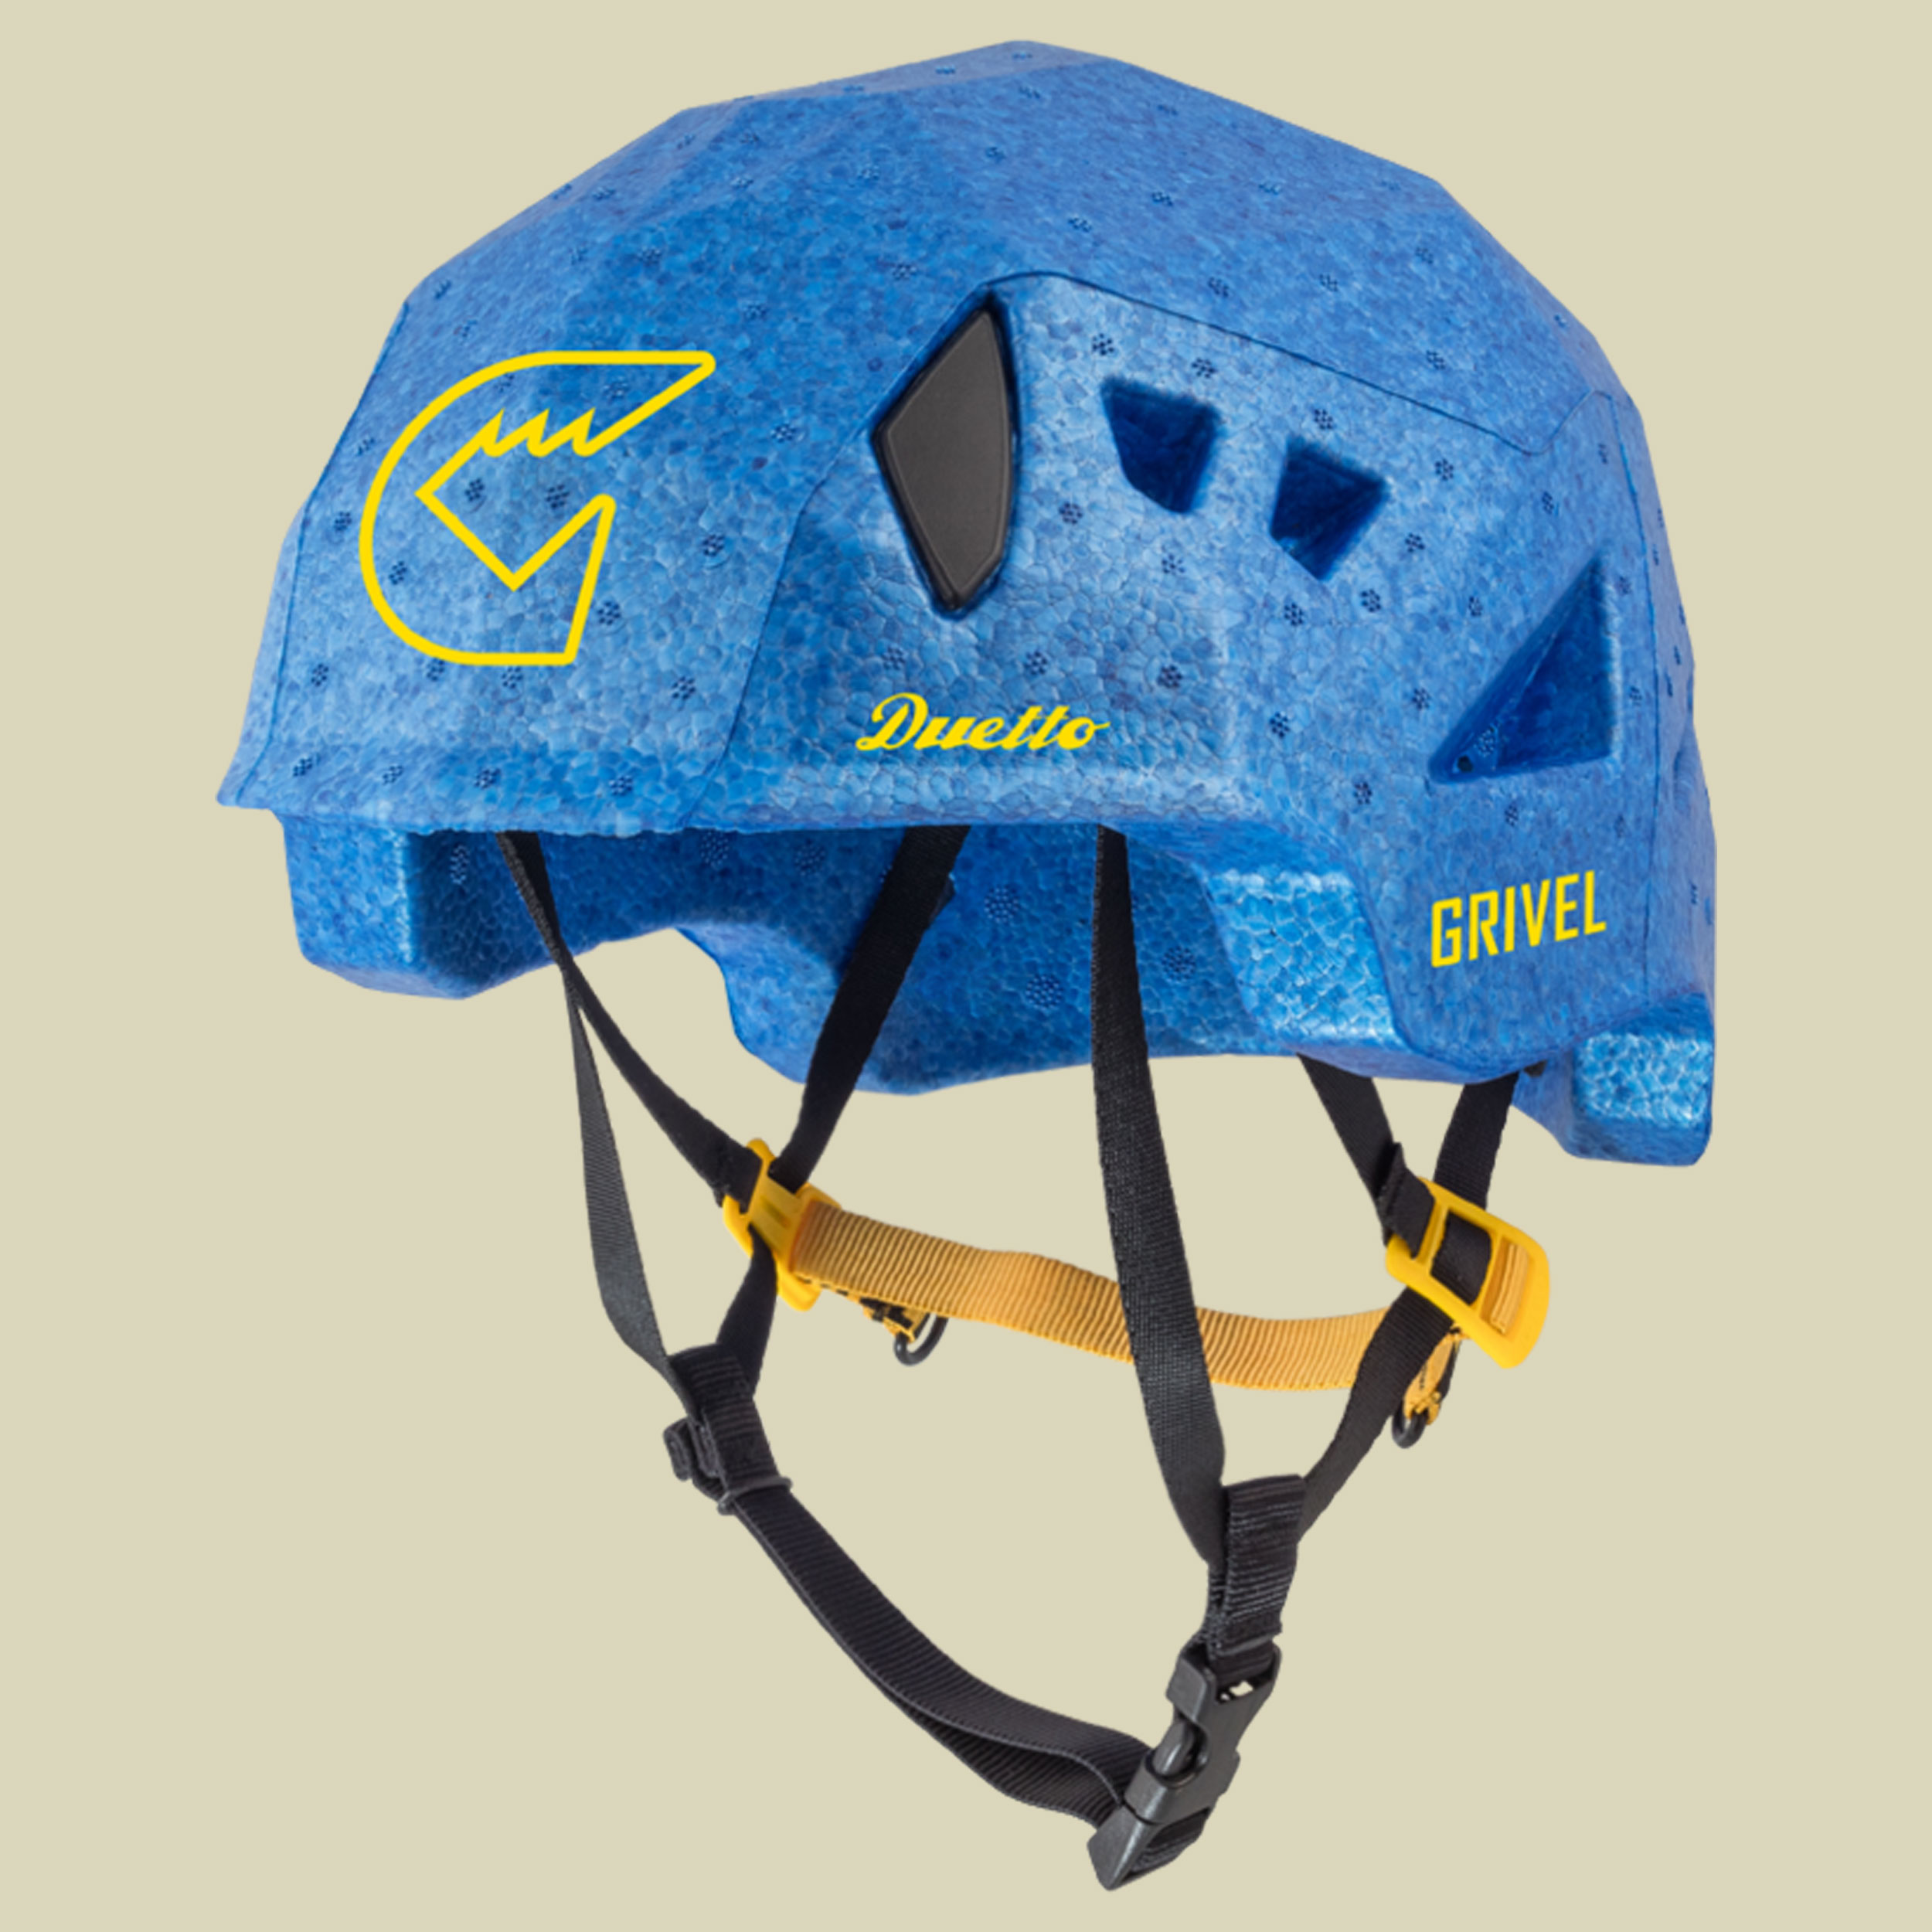 Helmet DUETTO Größe 53-60 cm Farbe blue